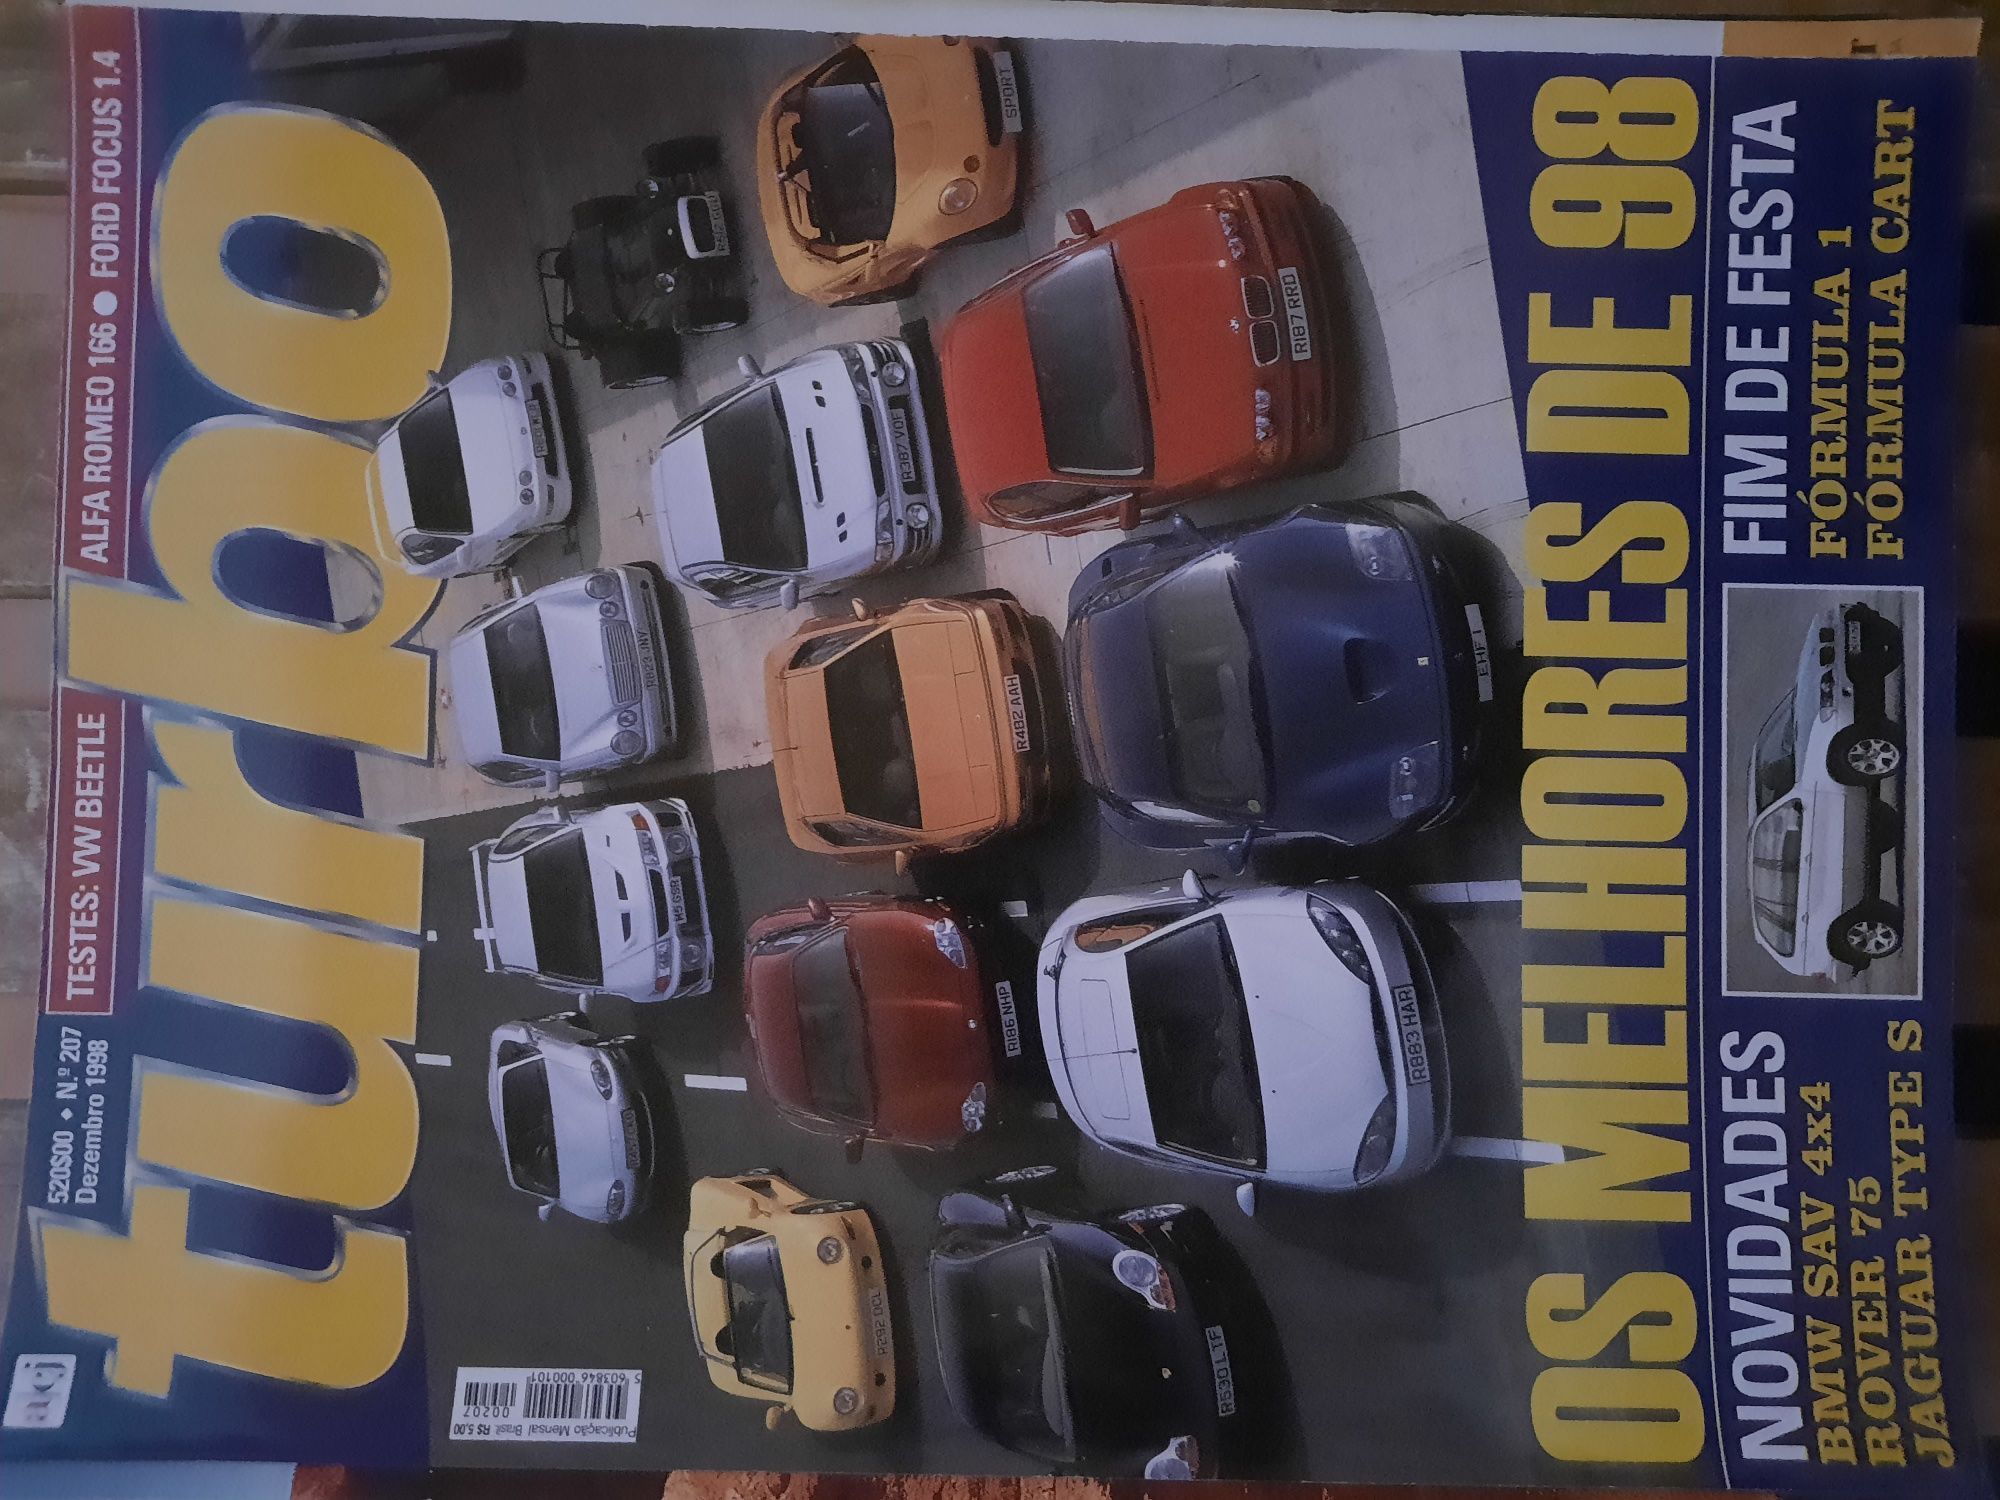 Revistas antigas "turbo" - lote ou unidade